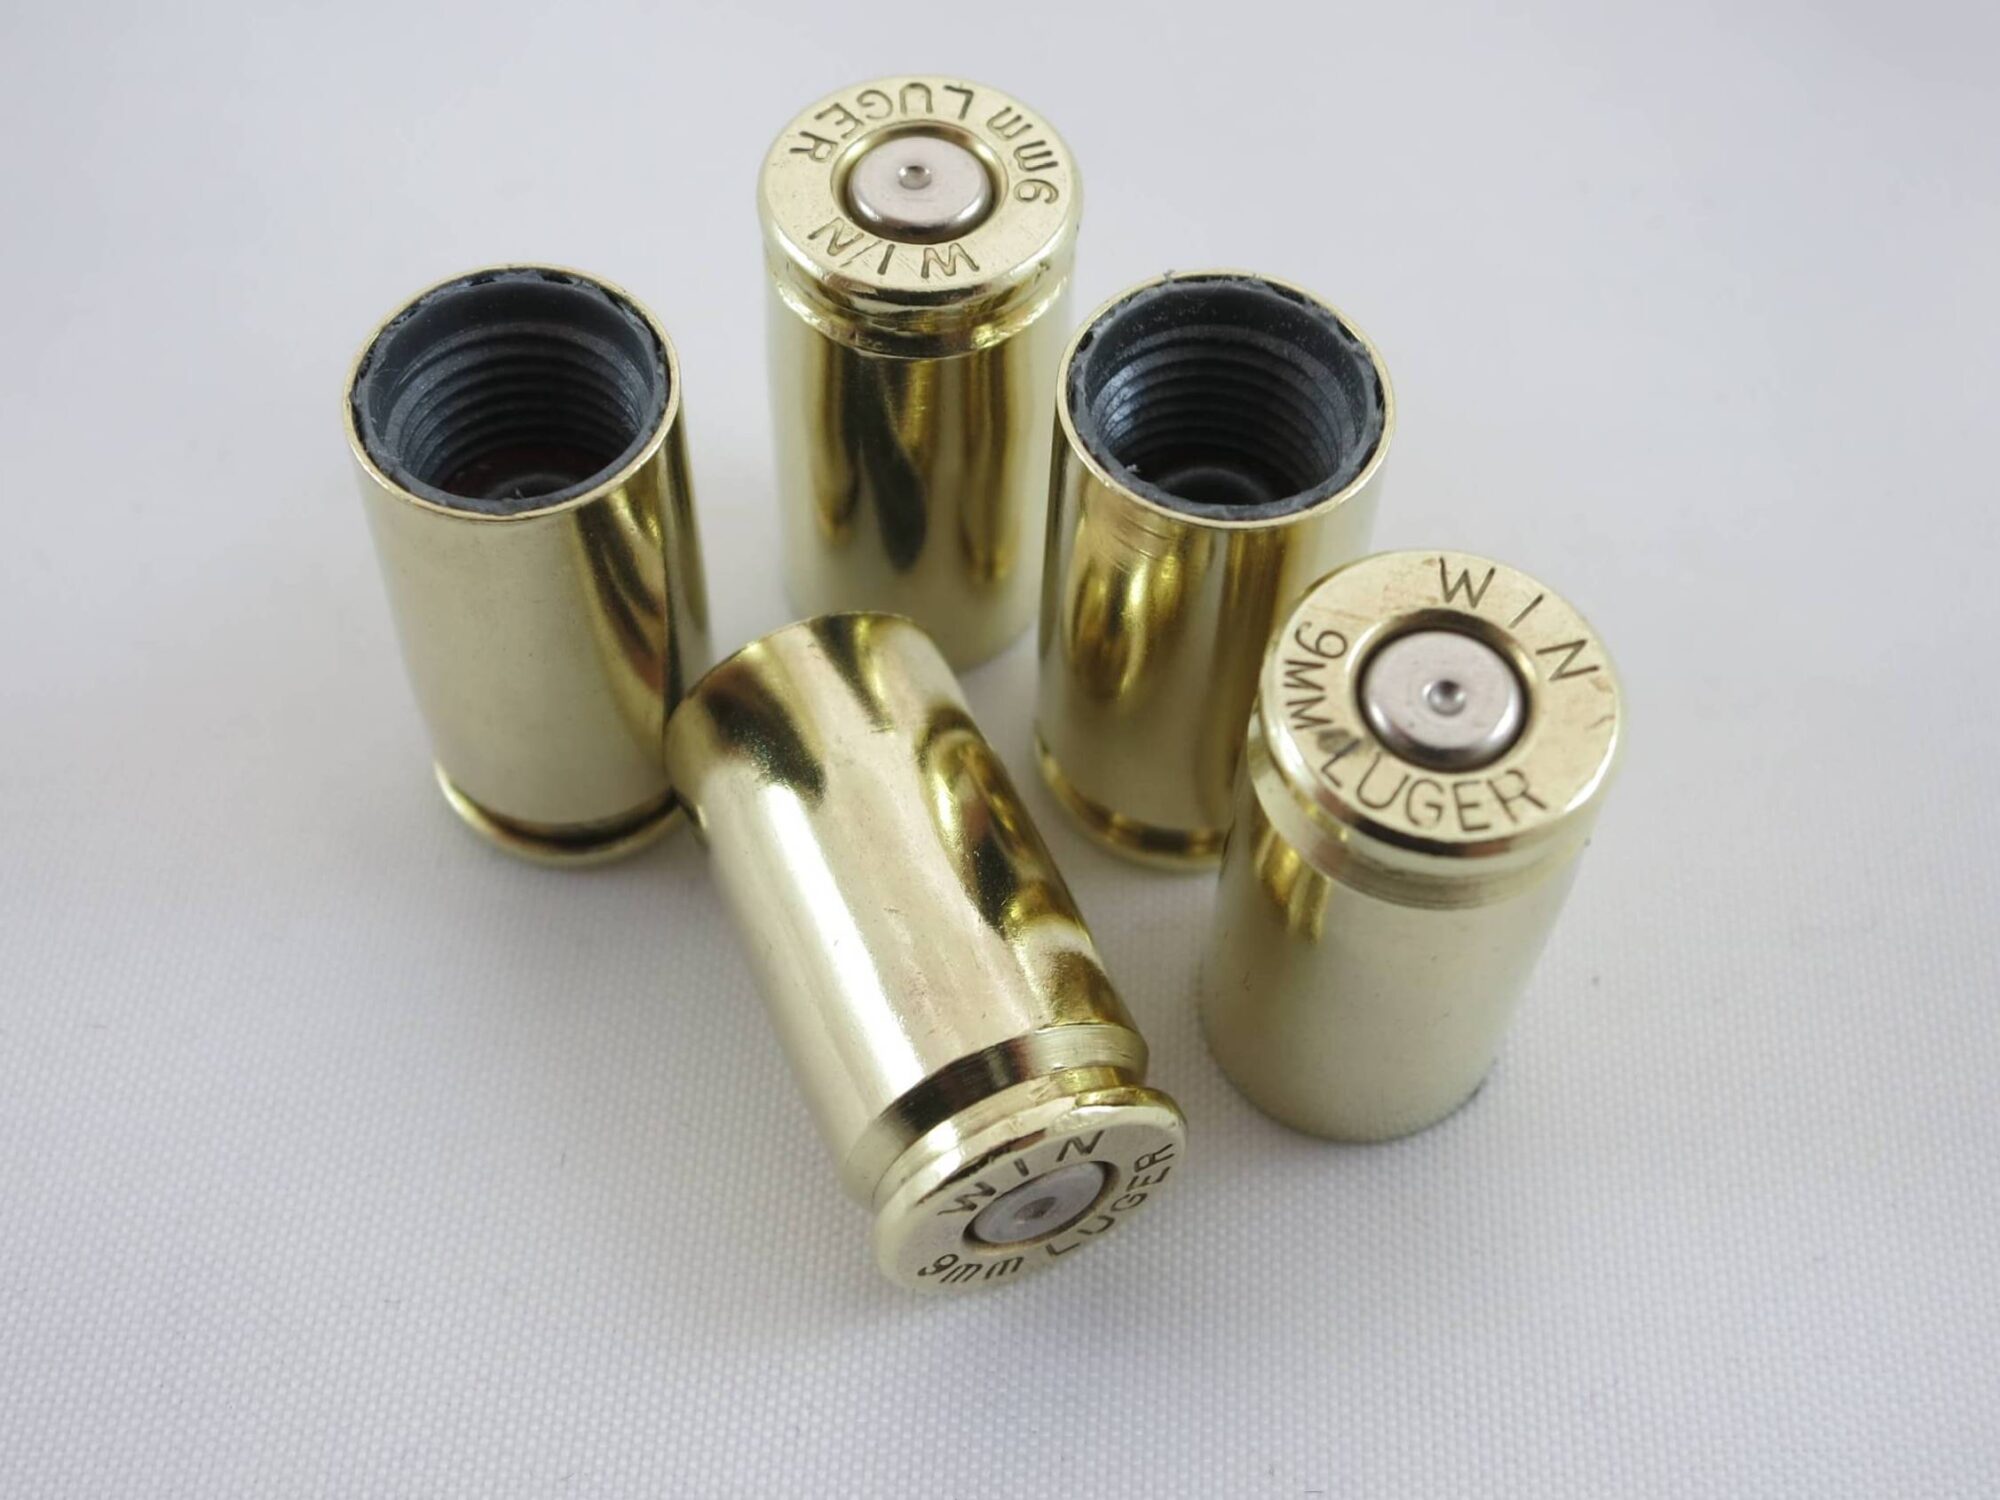 9mm Luger brass case tire valve cap-nickel primer